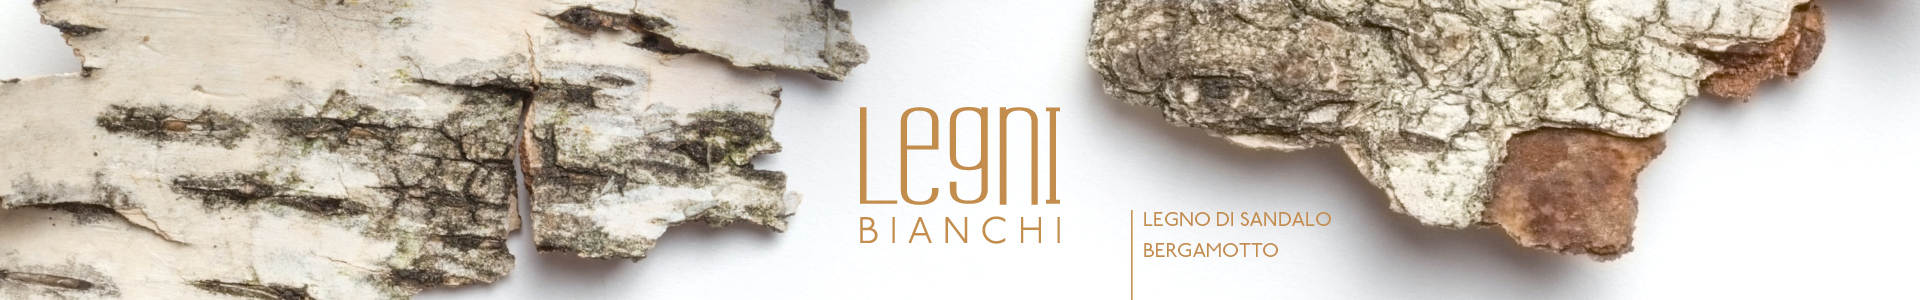 Legni-Bianchi-1920x300-021018.jpg